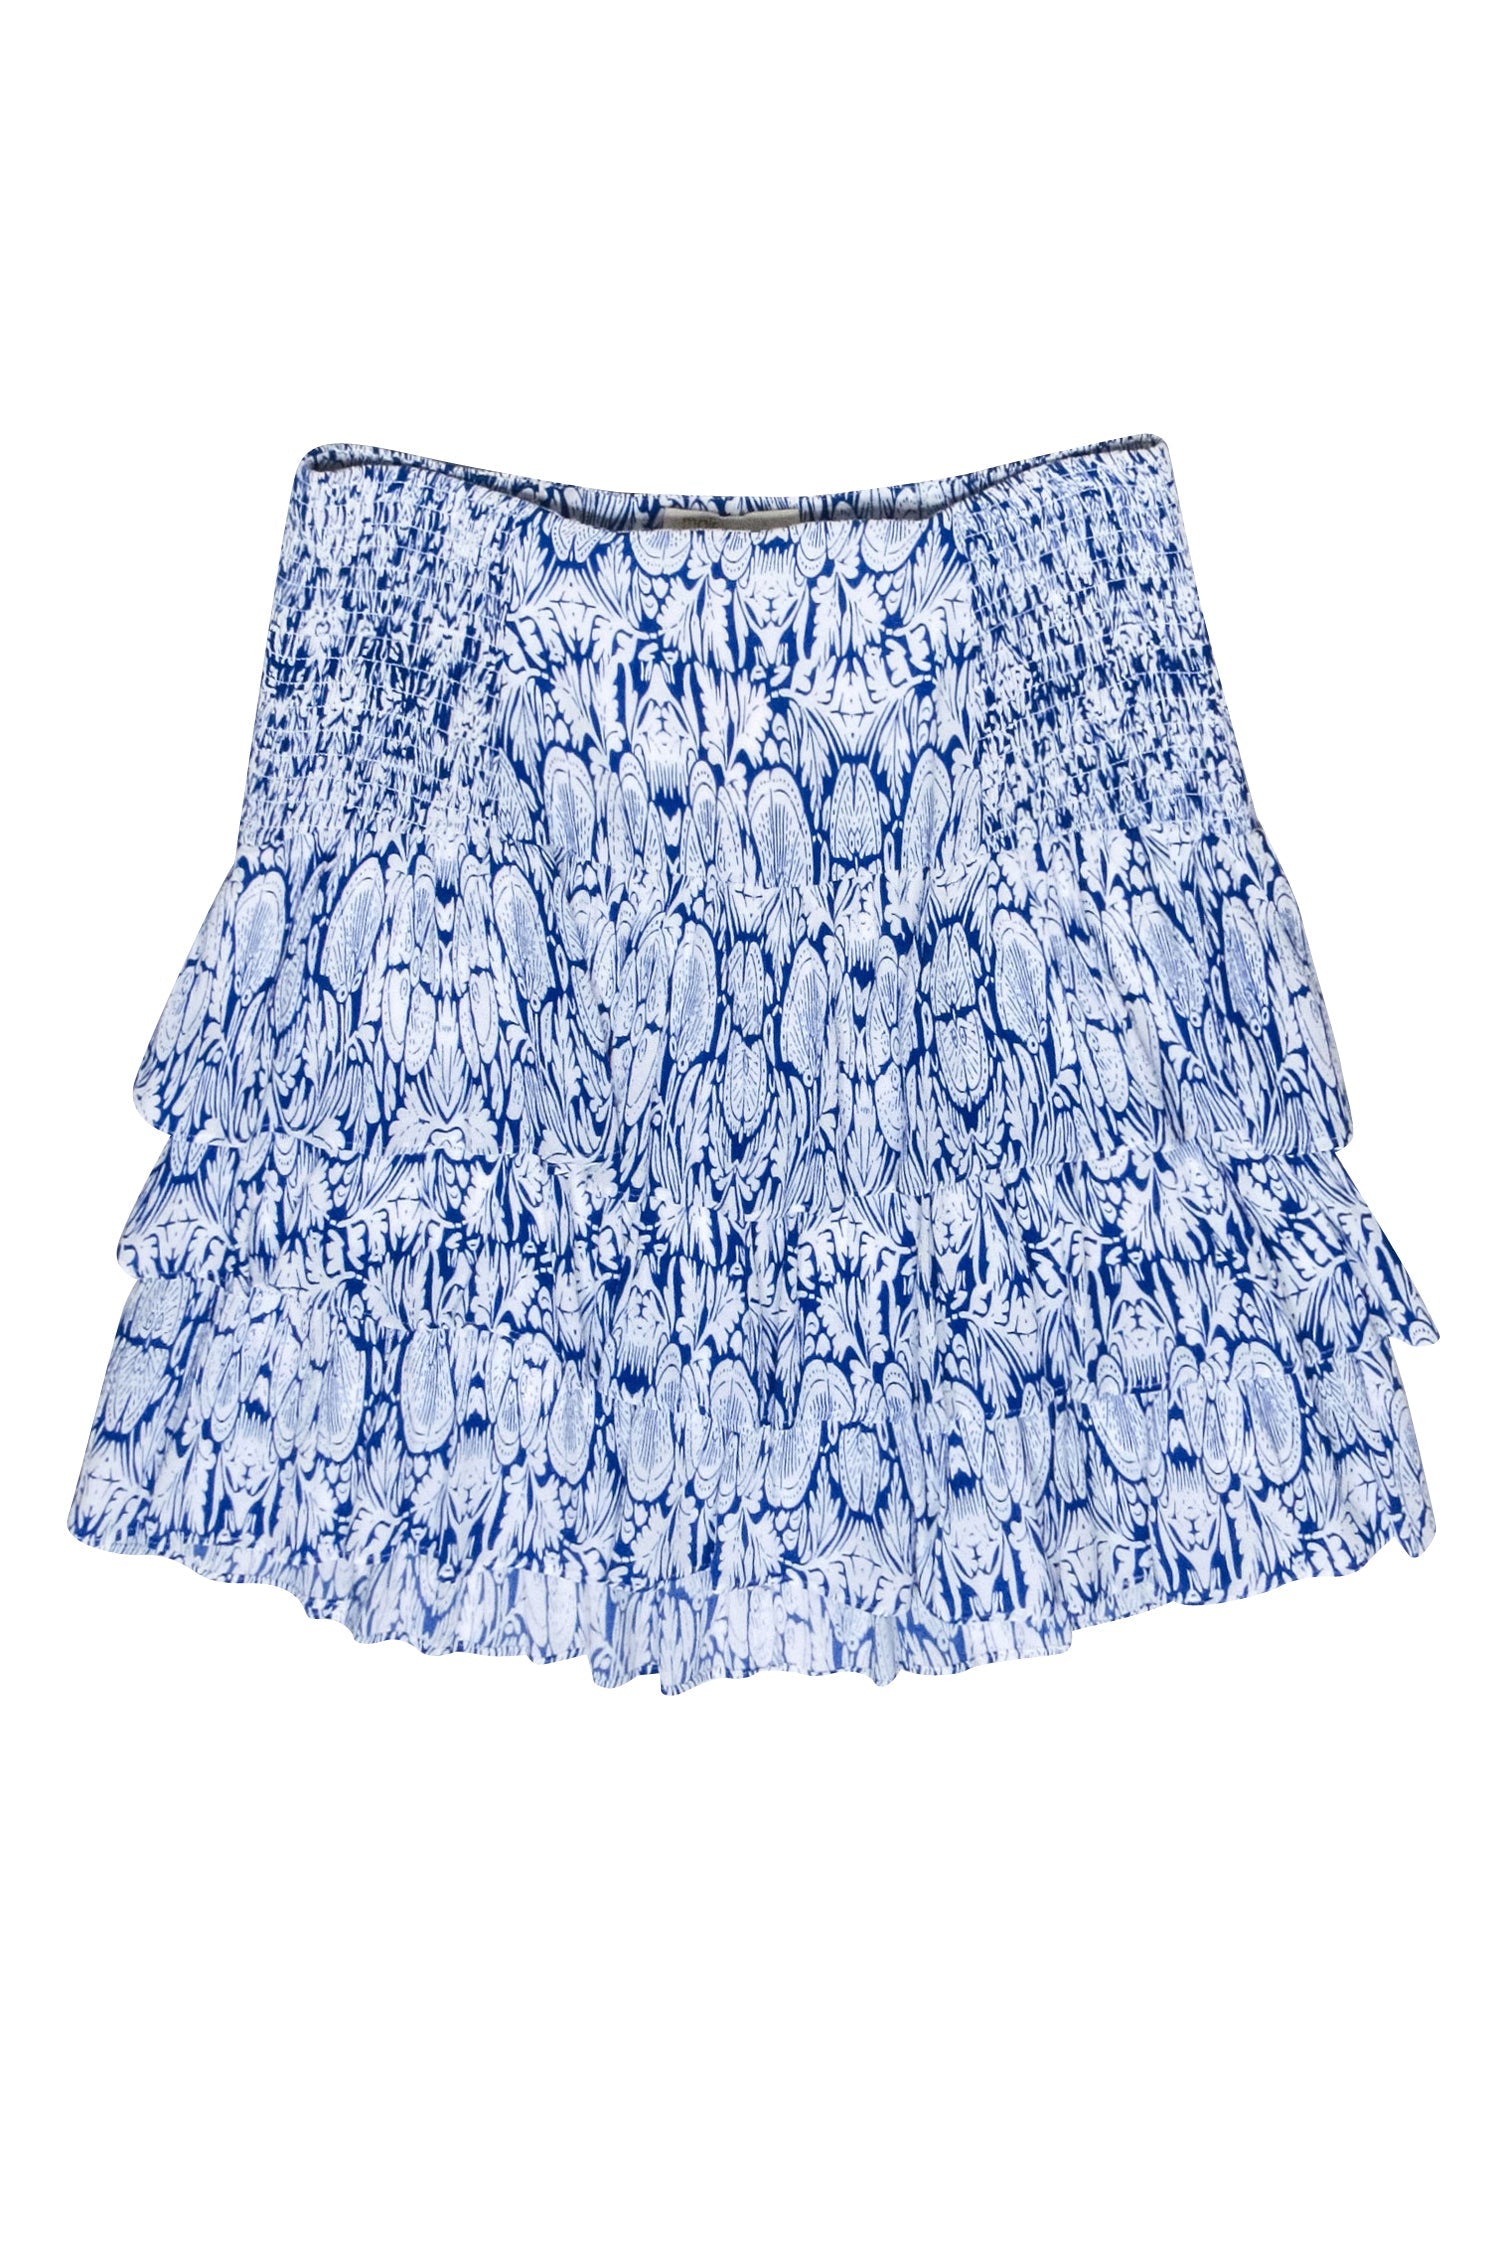 Maje - Blue & White Abstract Leaf Print Ruffled Mini Skirt Sz L